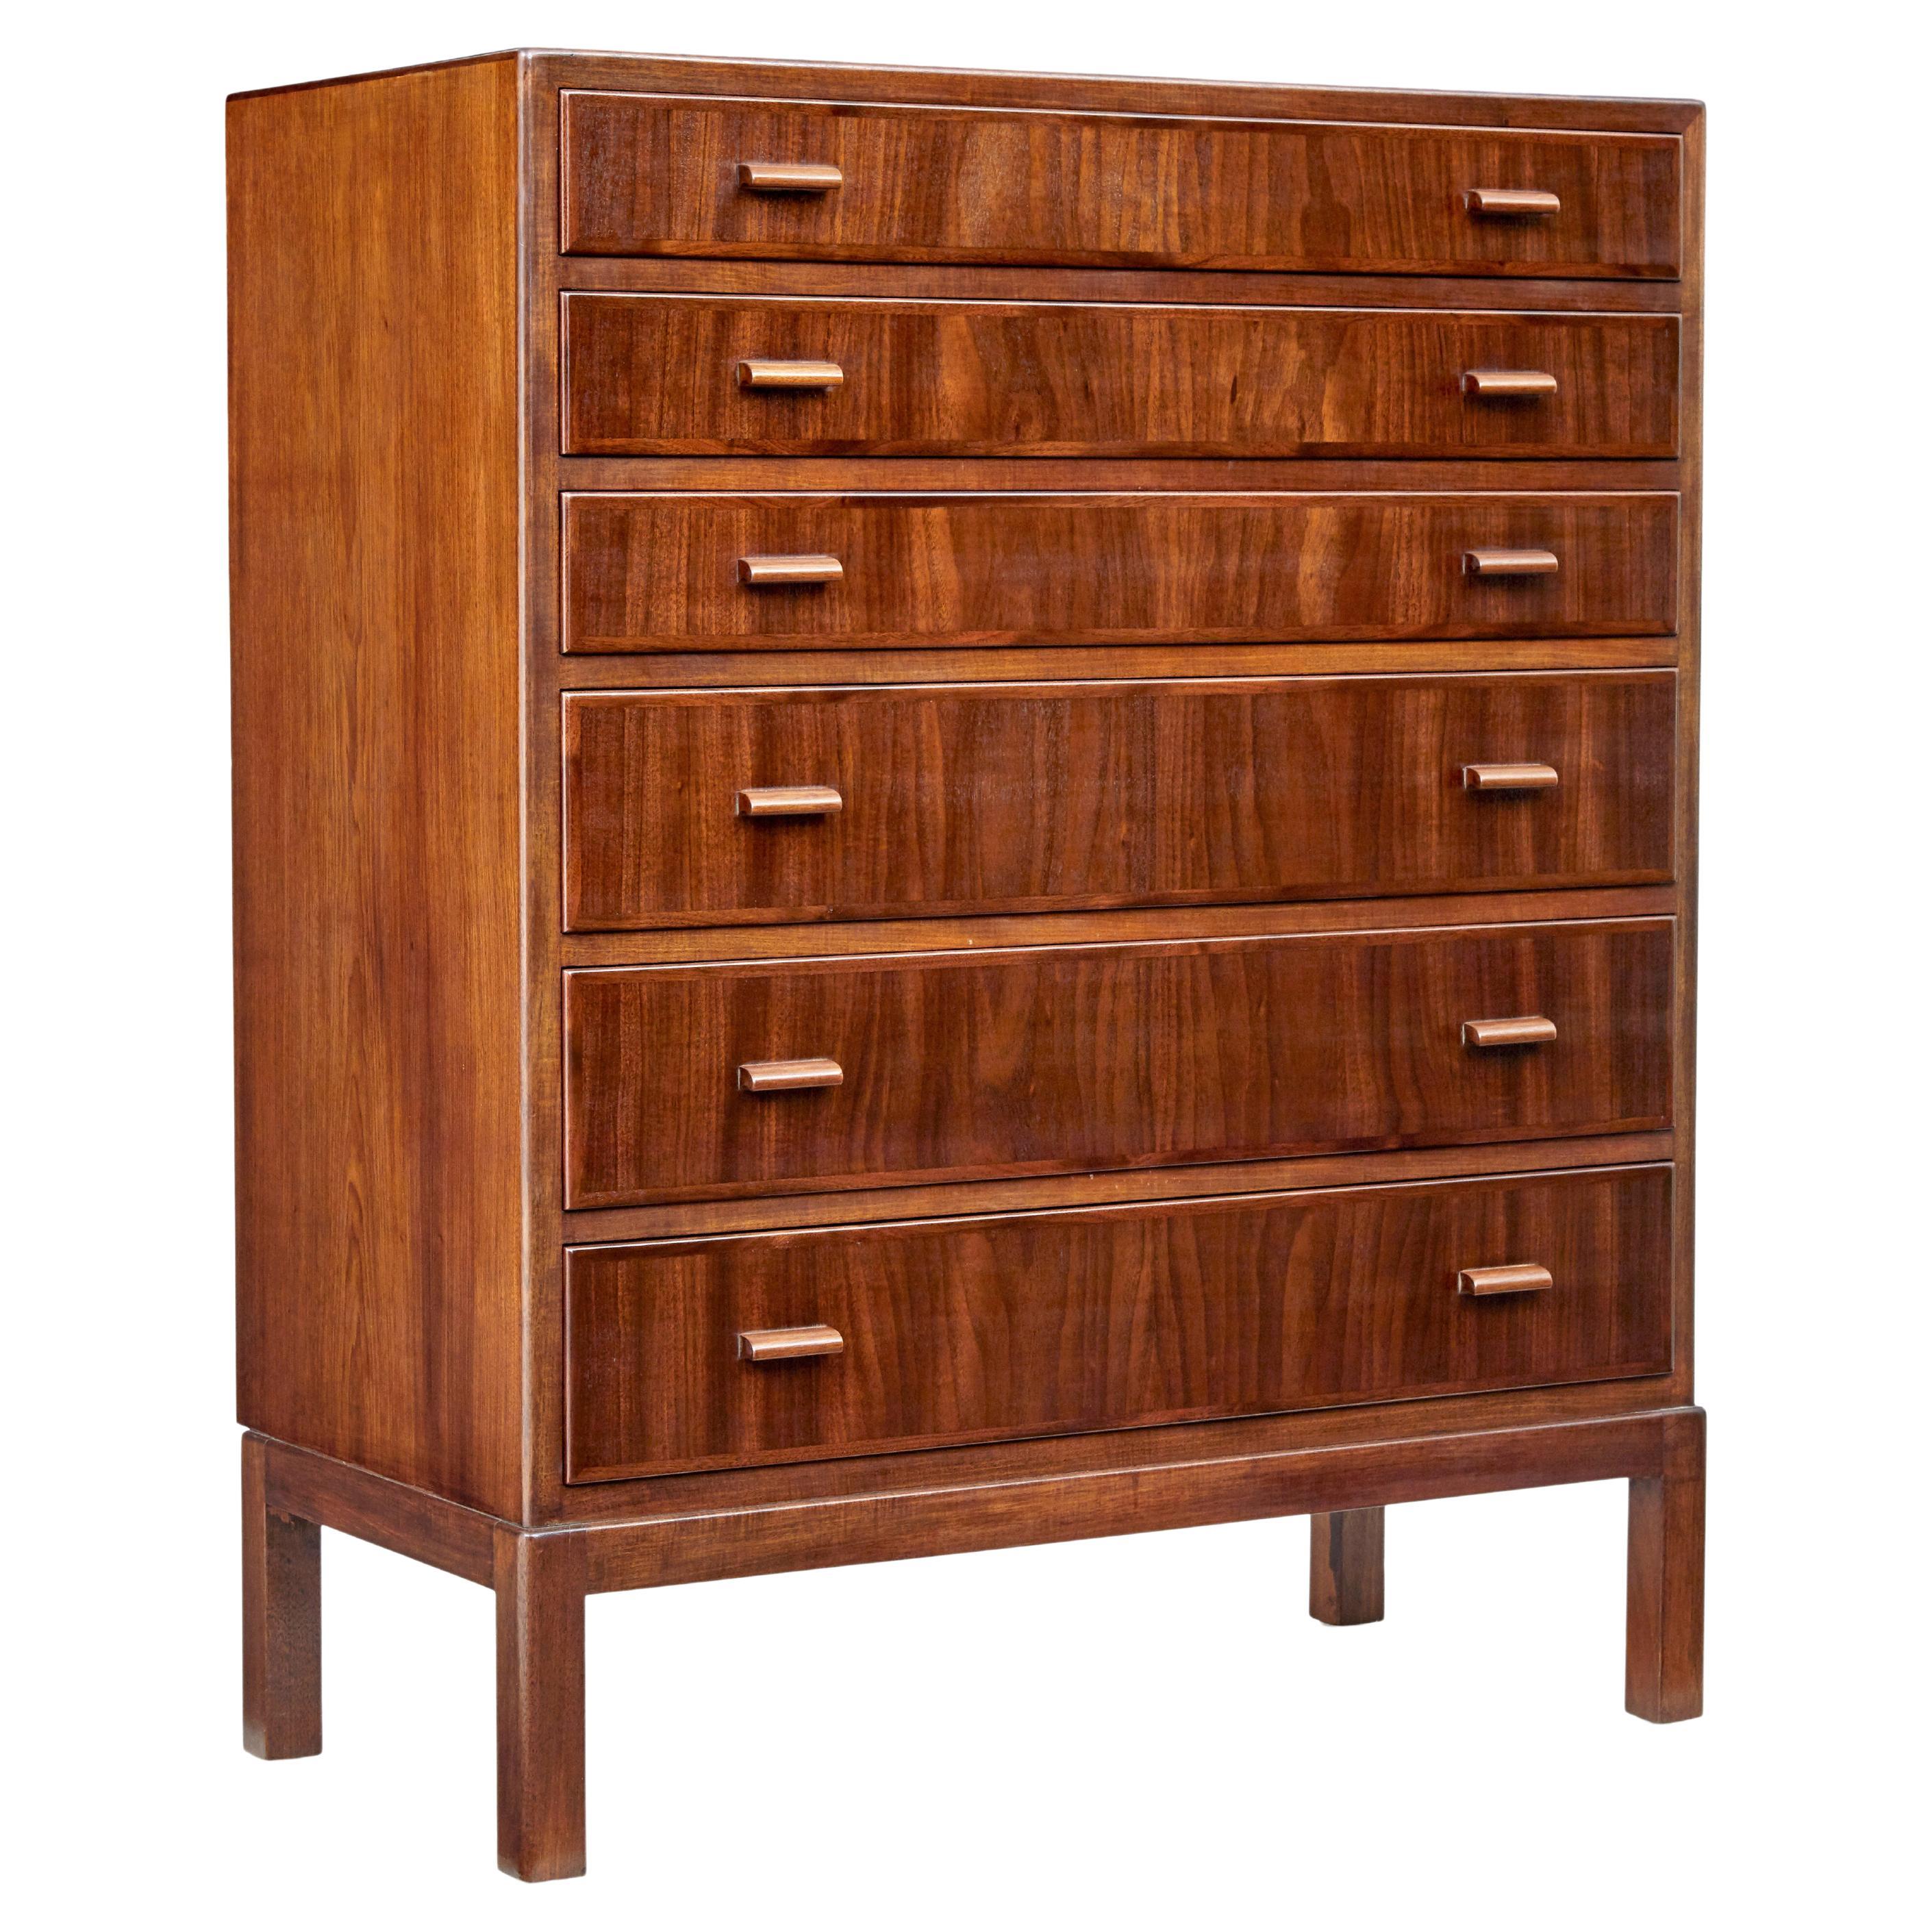 Mid 20th century Danish teak chest of drawers